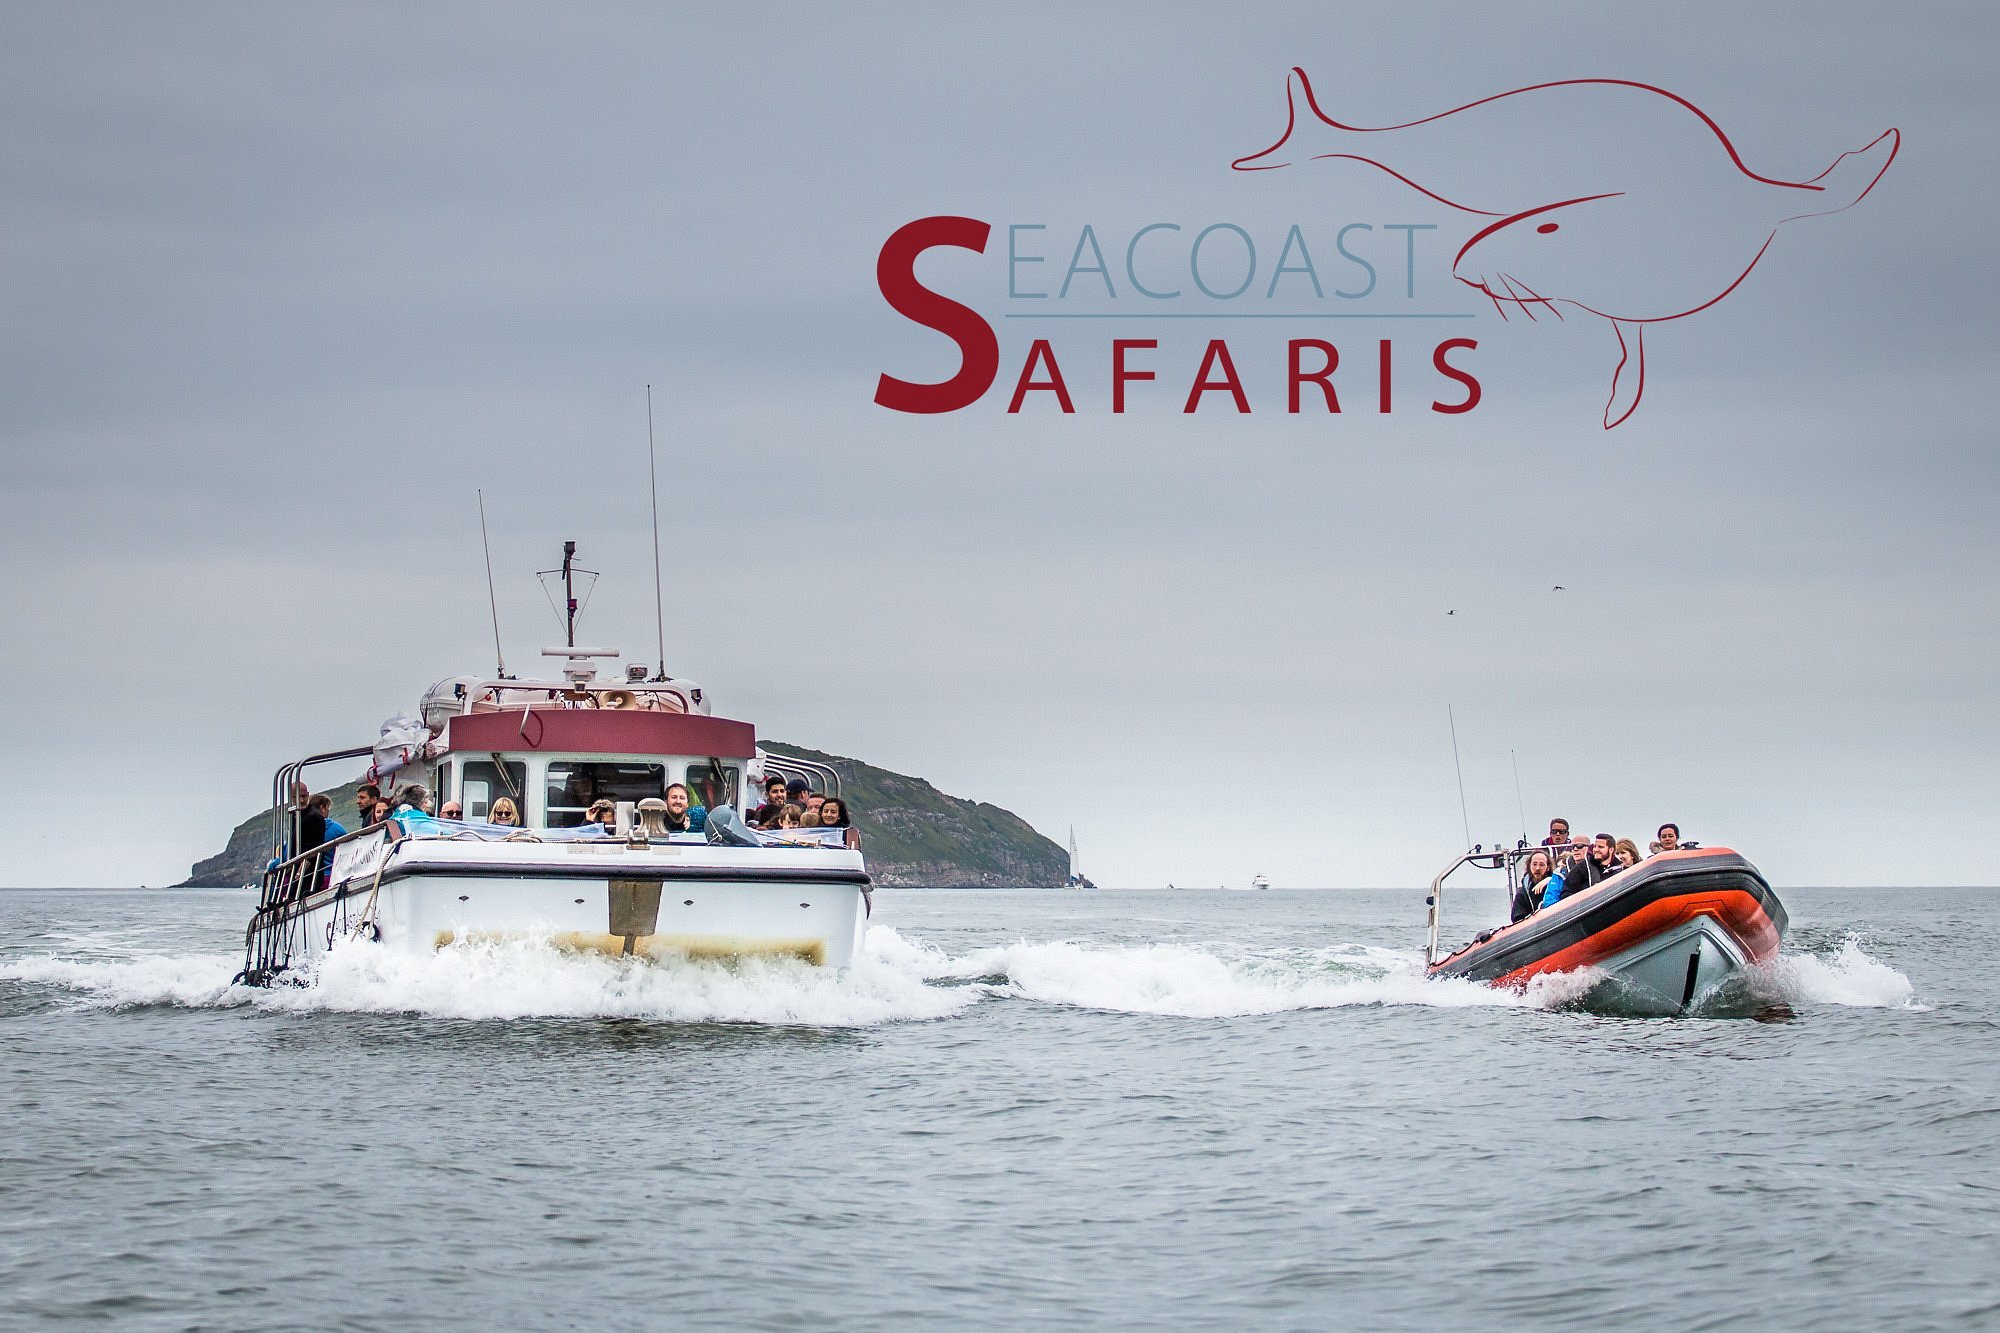 seacoast safaris photos